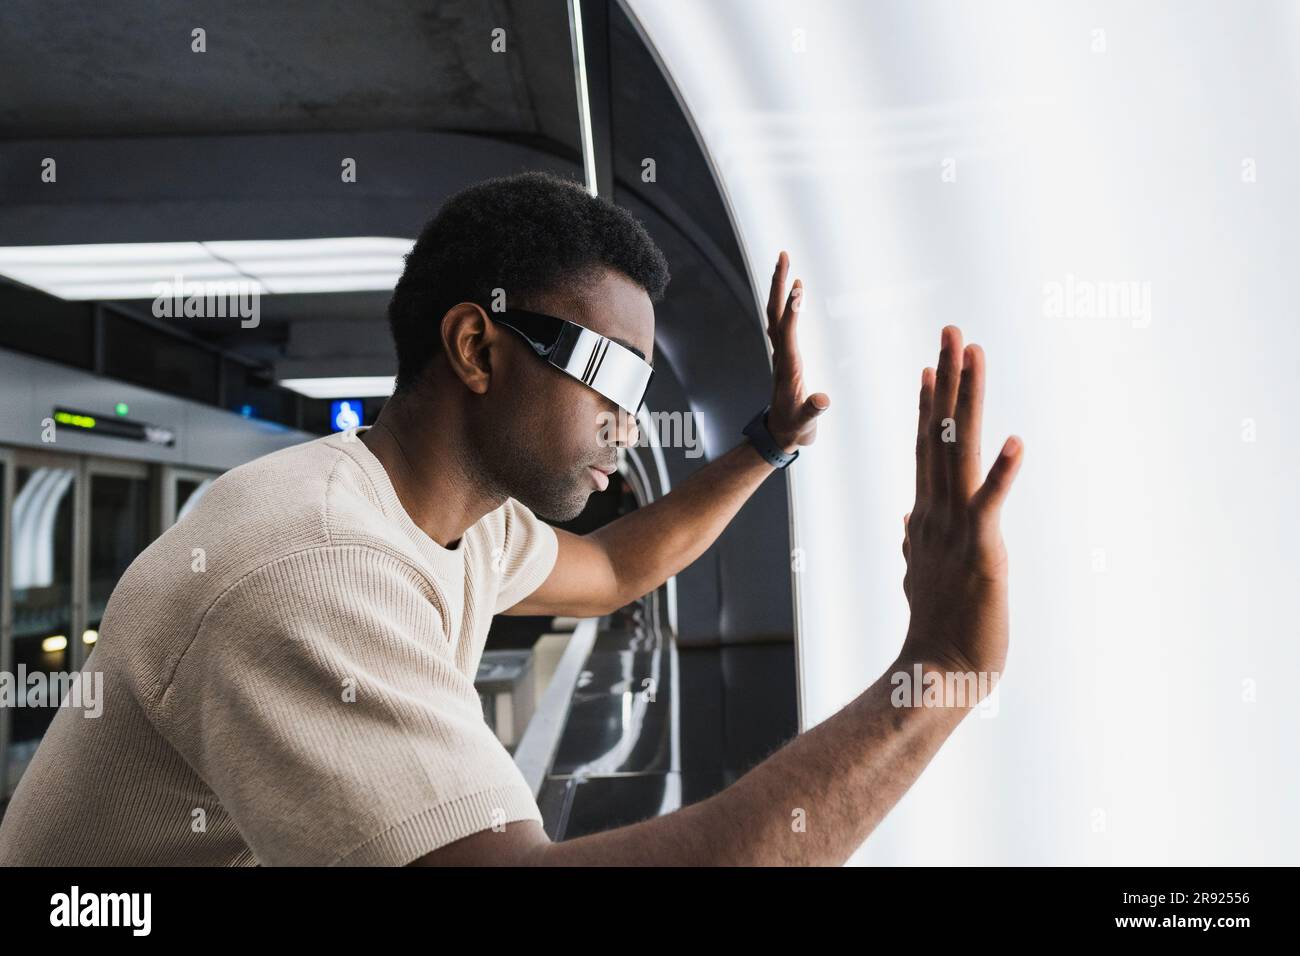 Futuristic man with cyber glasses examining light pane Stock Photo